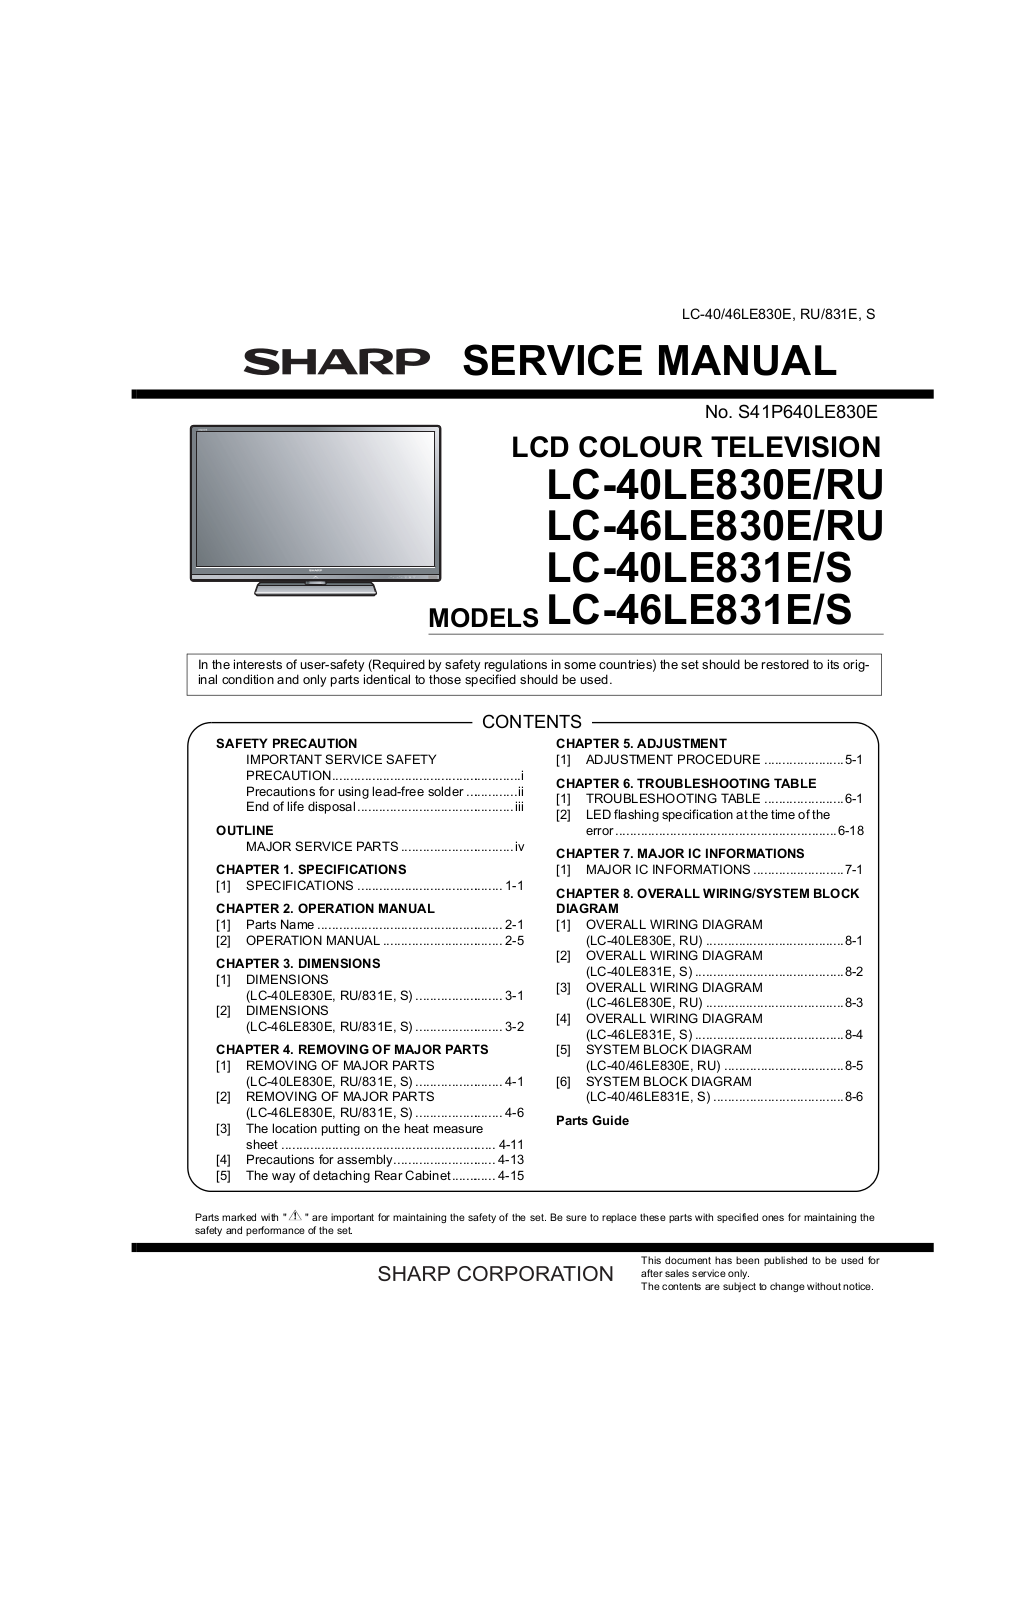 SHARP LC-40LE830RU, LC-46LE830RU, LC-40LE831S, LC-46LE831S, LC-40LE830E Service Manual